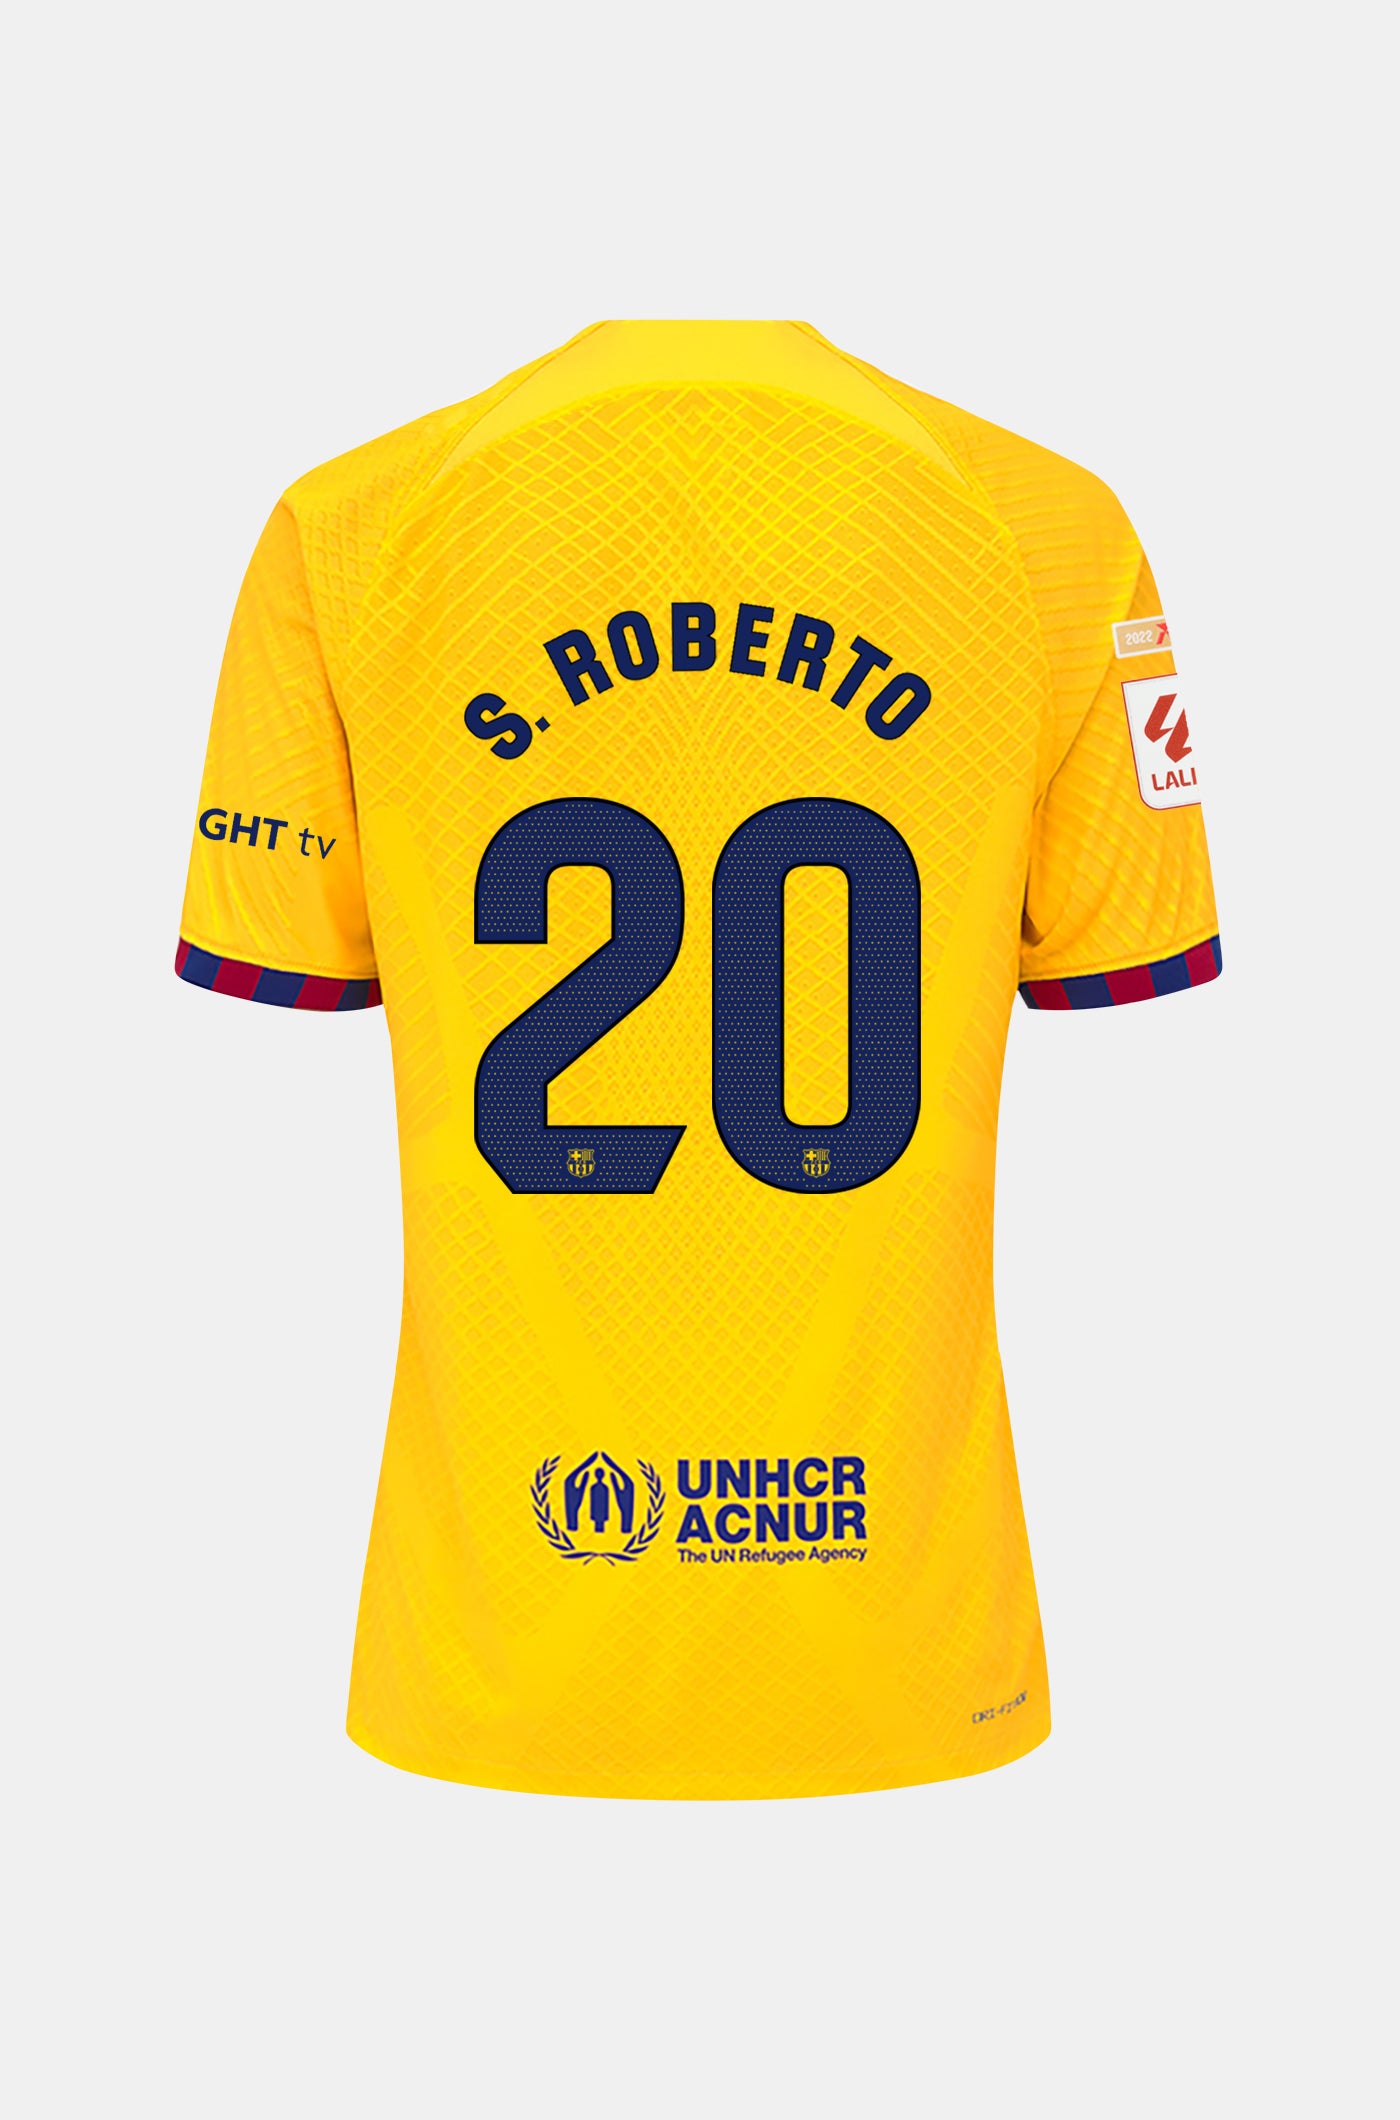 LFP FC Barcelona fourth shirt 23/24 Player’s Edition  - S. ROBERTO